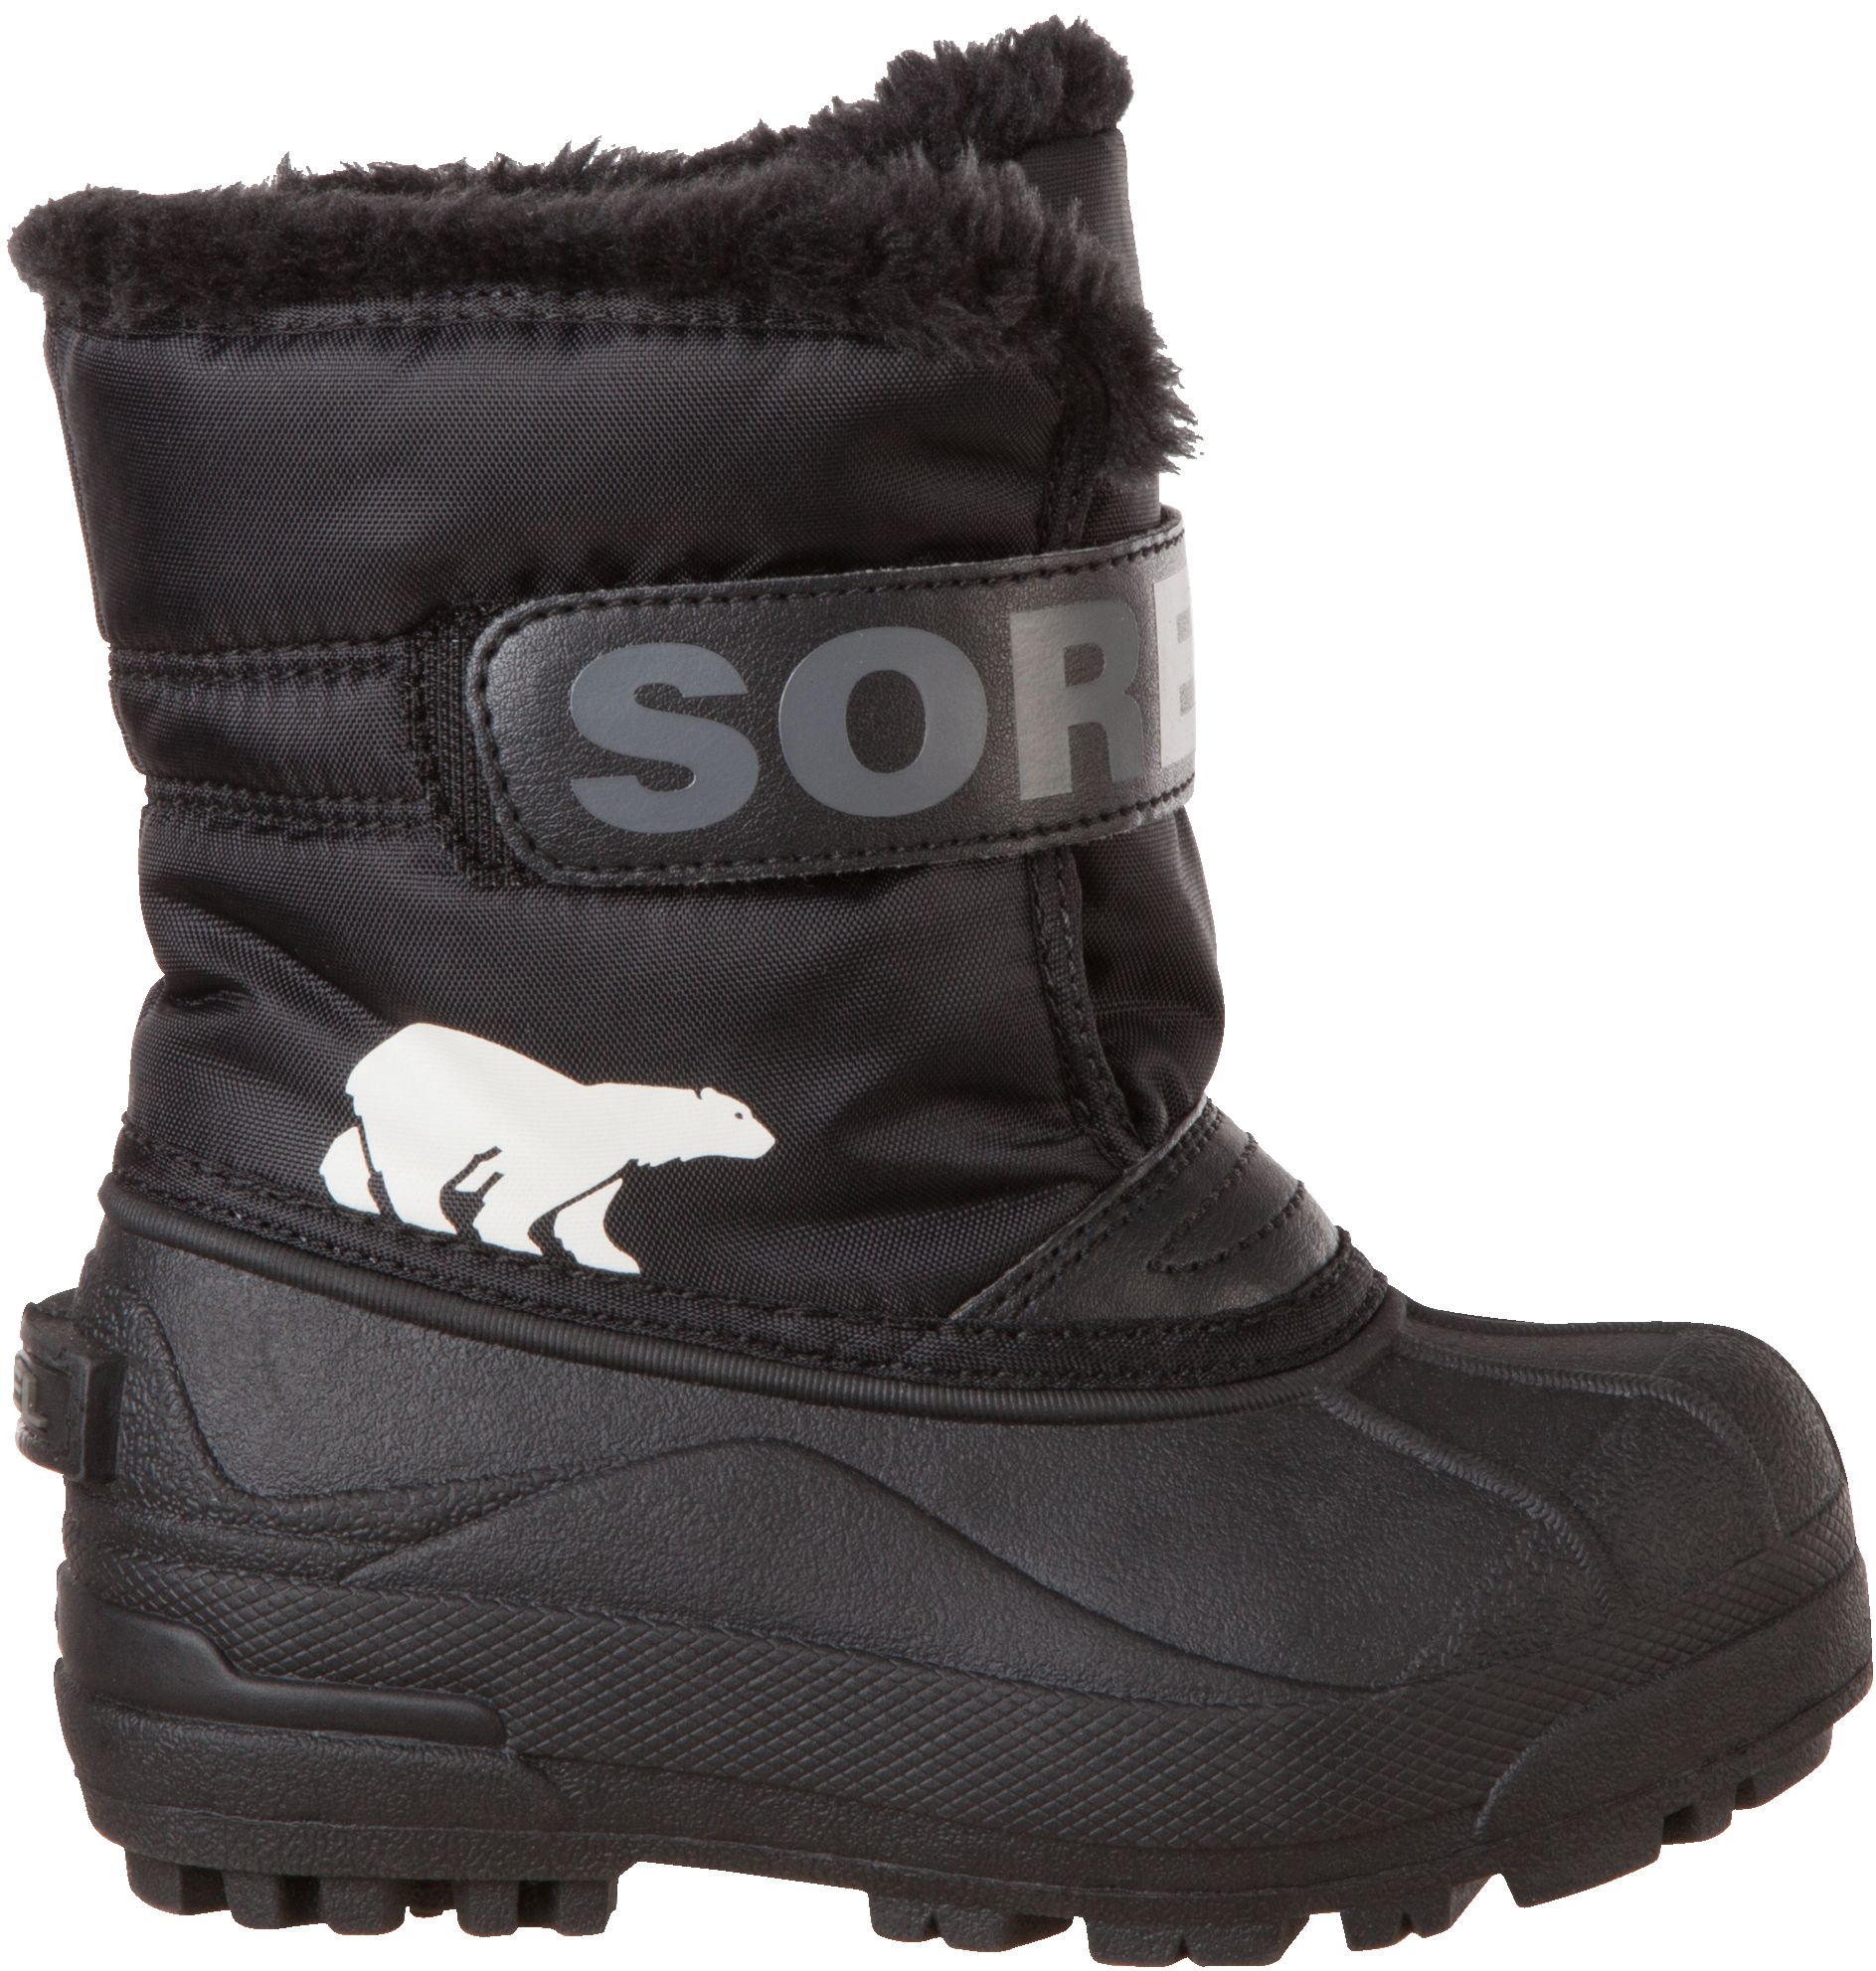 Sorel Boys' Toddler Snow Commander Waterproof Winter Boots